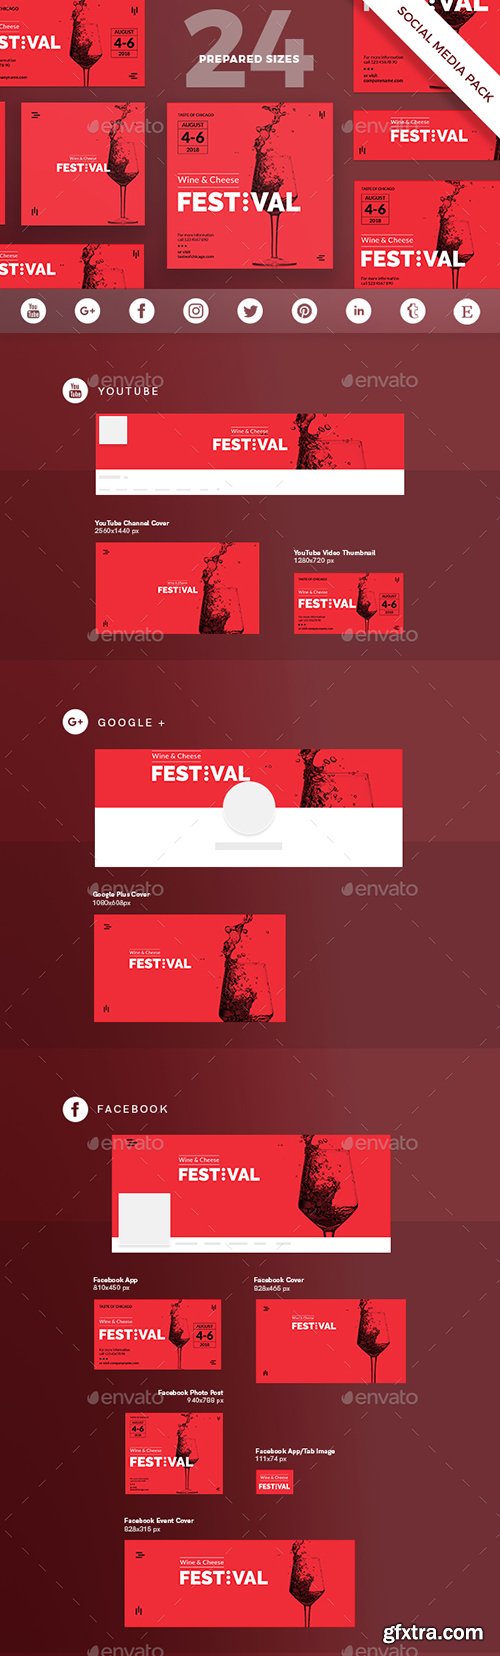 Graphicriver - Wine Festival Social Media Pack Template 20903311